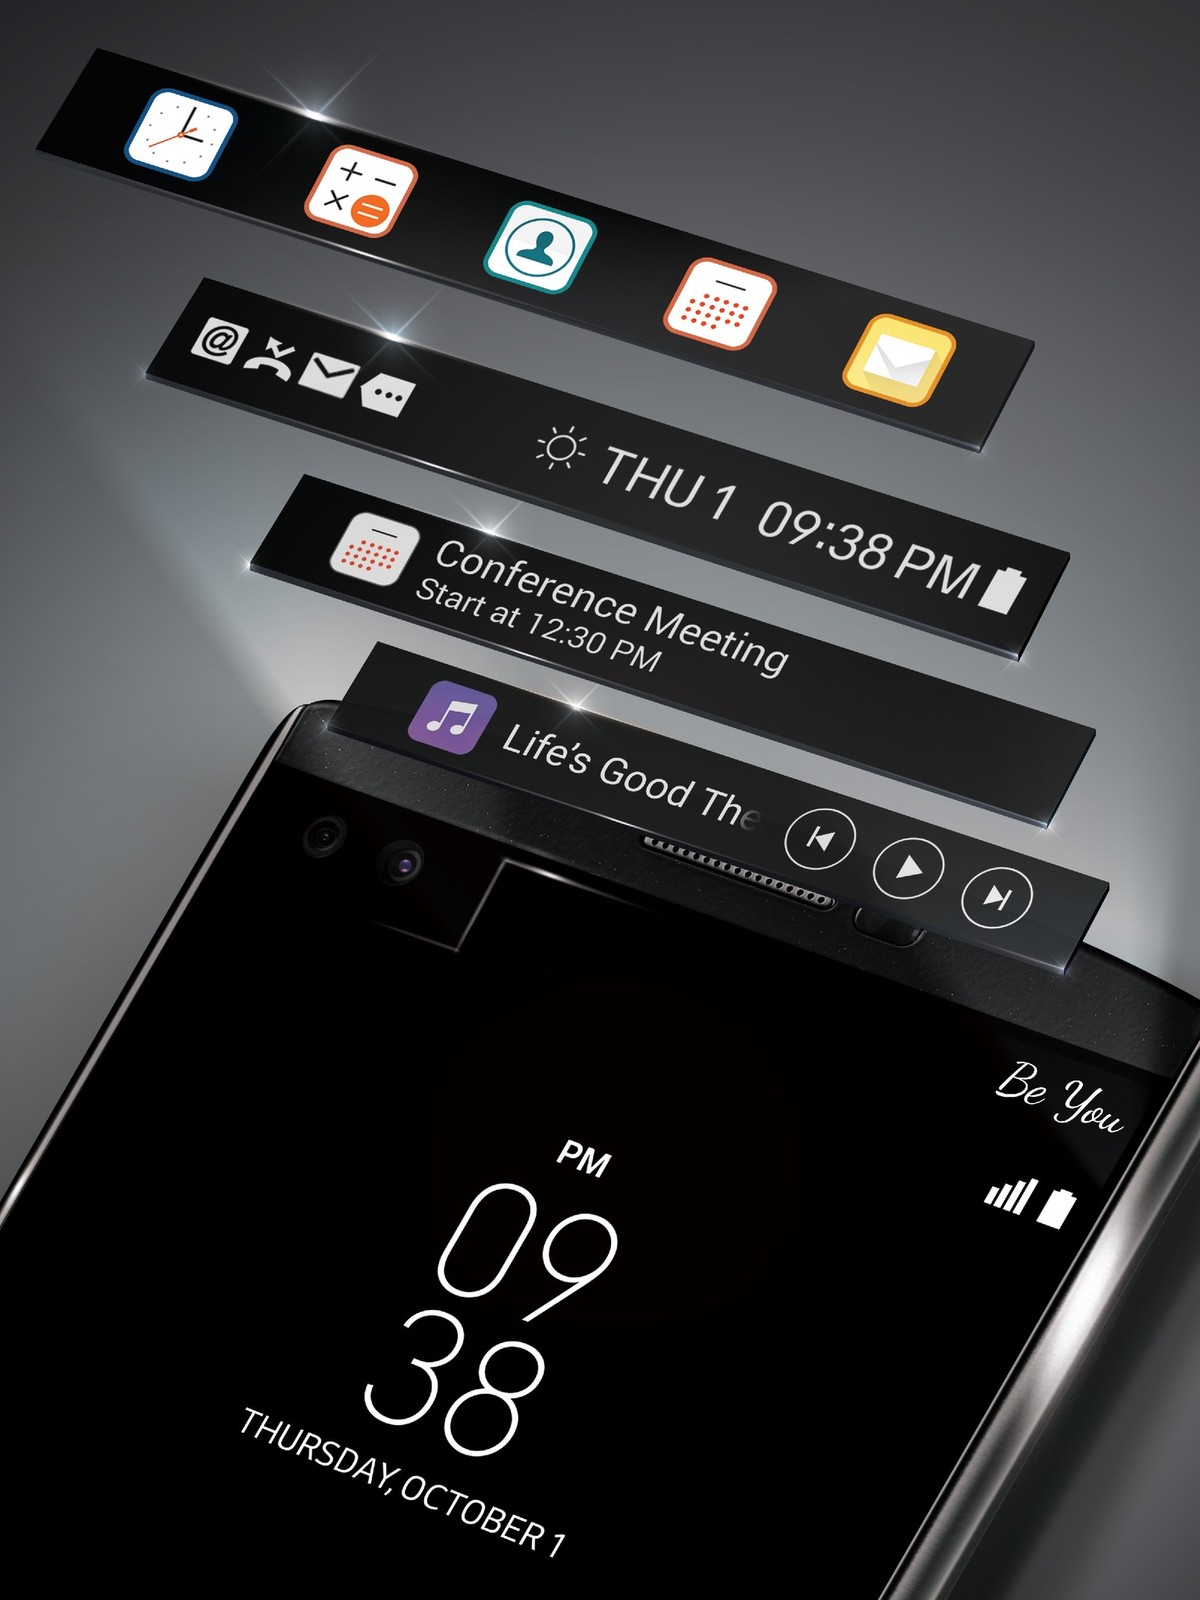 LG V10 Second Screen.jpg